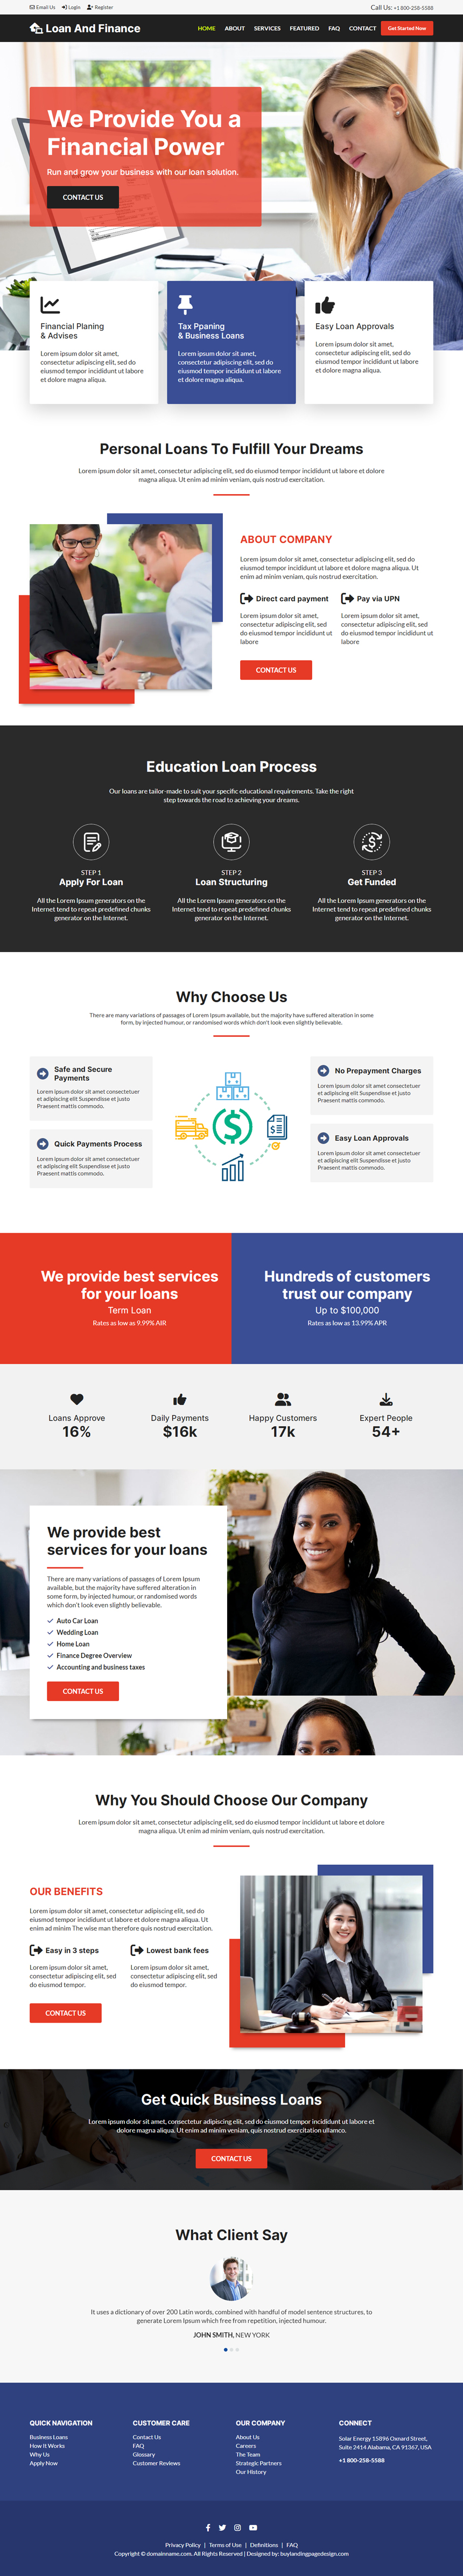 loan and finance service responsive website design